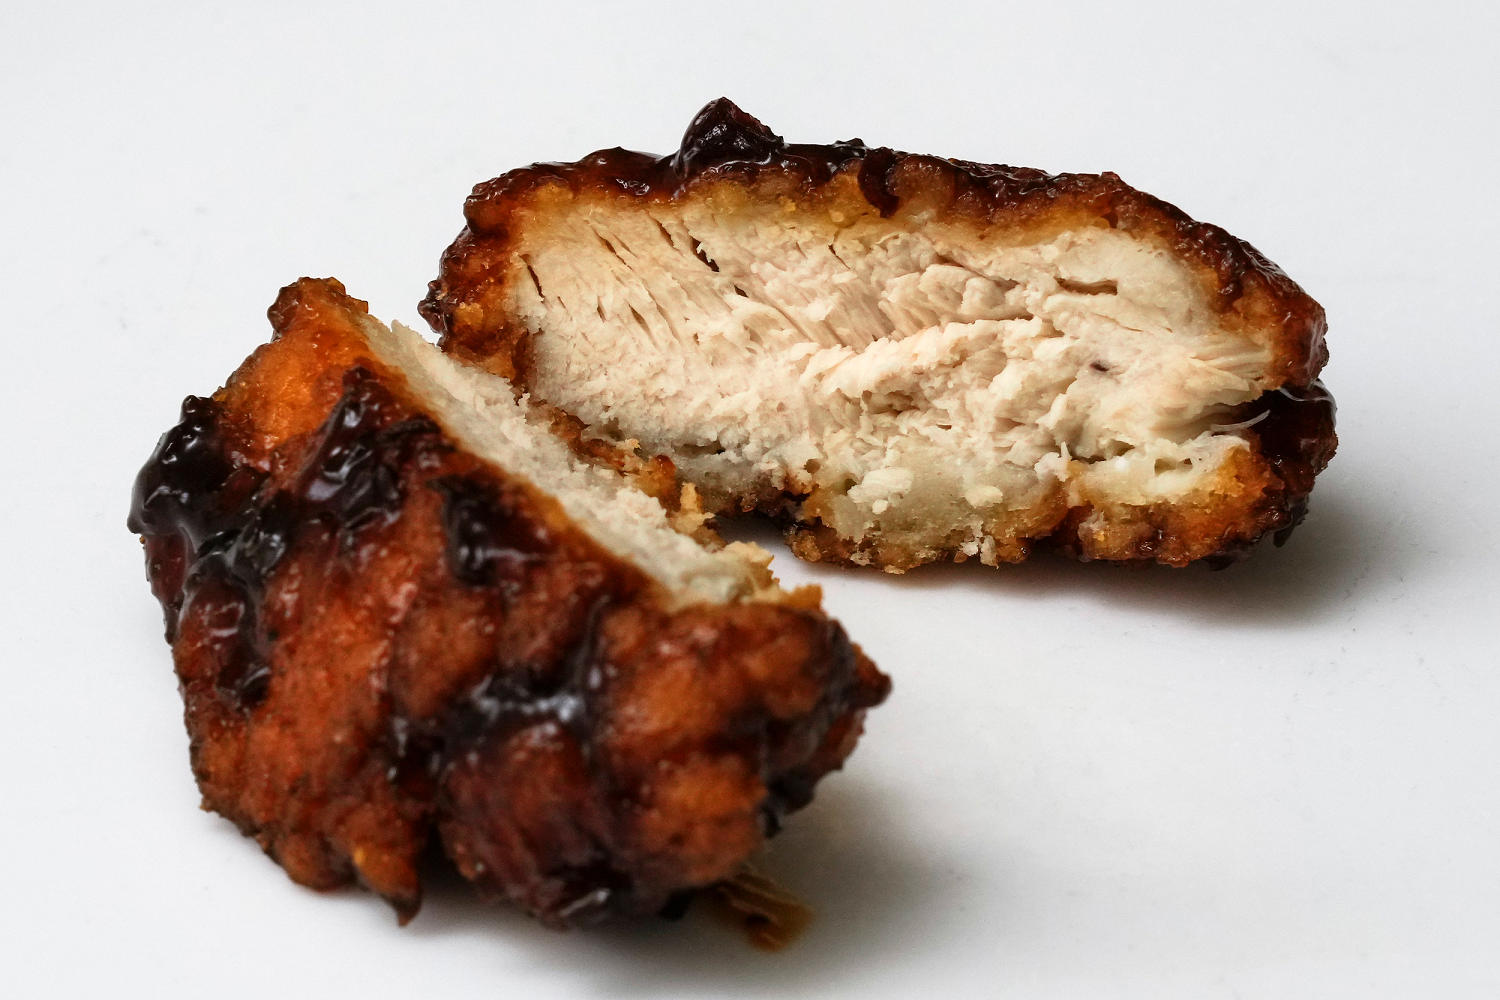 ‘Boneless’ chicken wings can have bones, Ohio Supreme Court decides